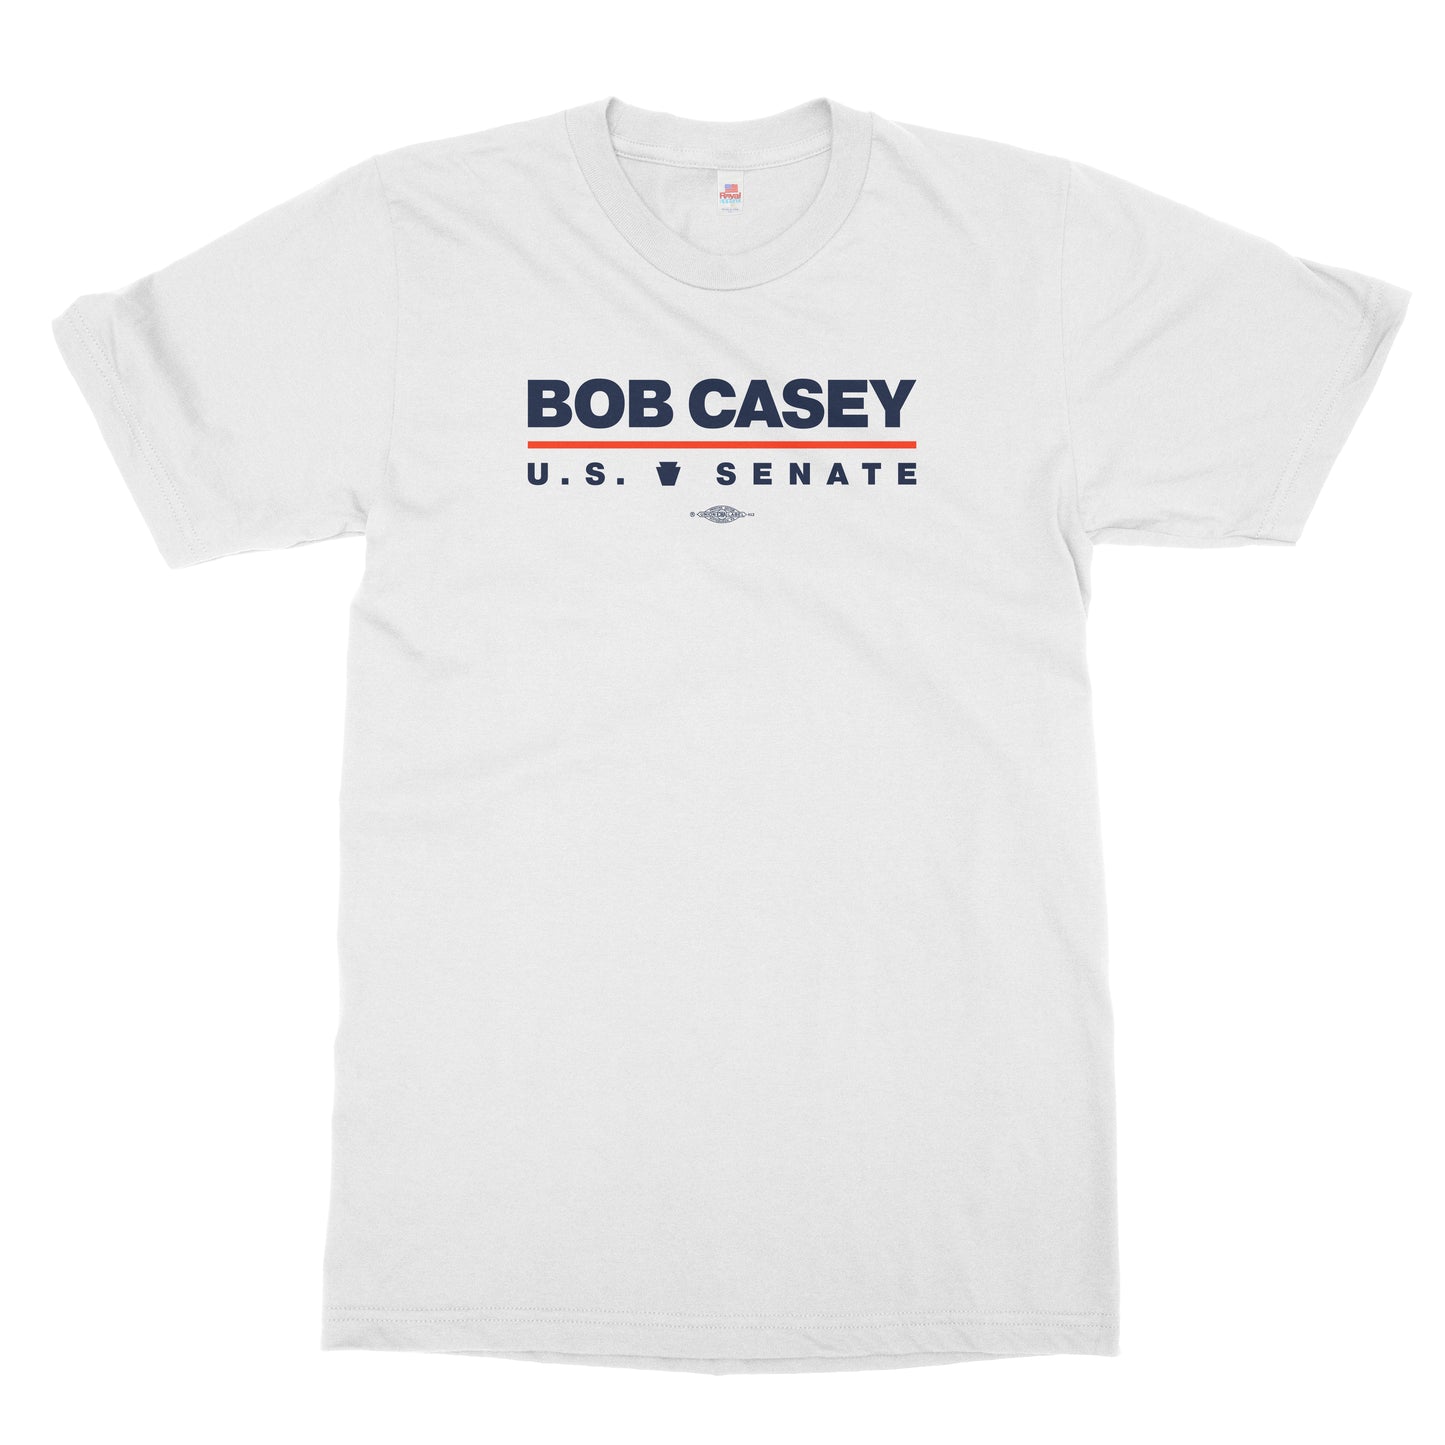 Bob Casey for Senate T-shirt